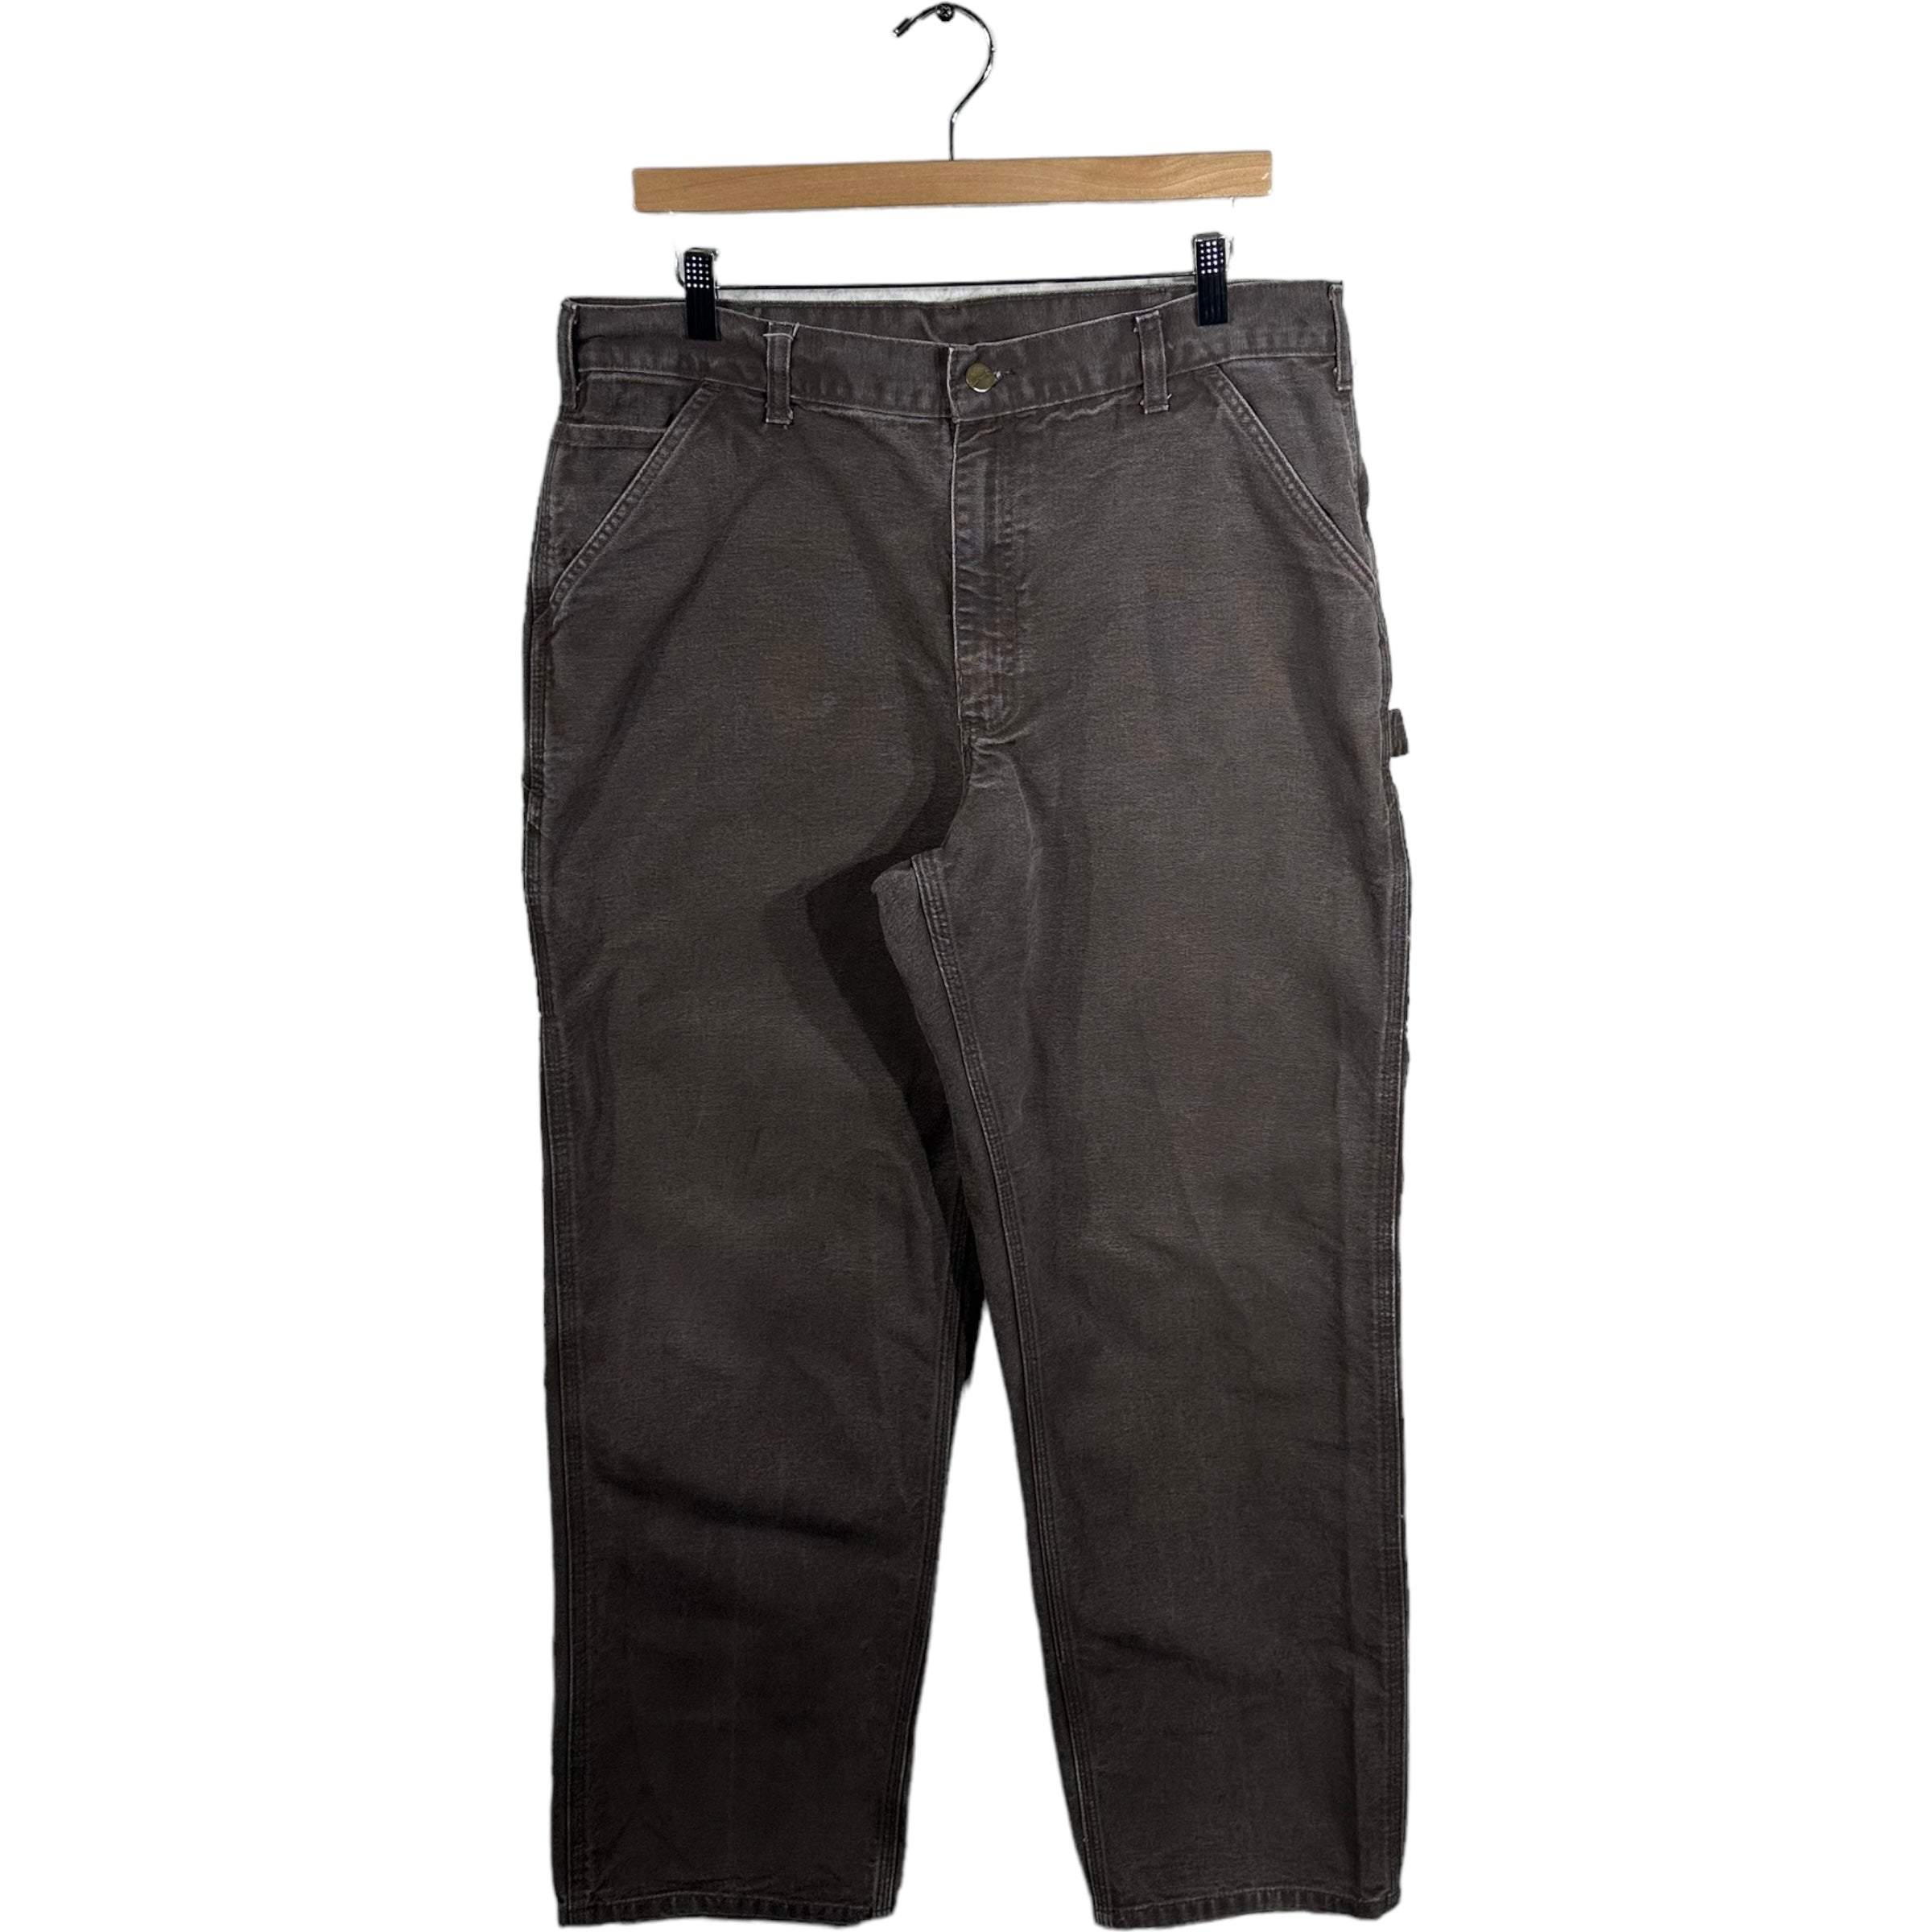 Vintage Carhartt Carpenter pants